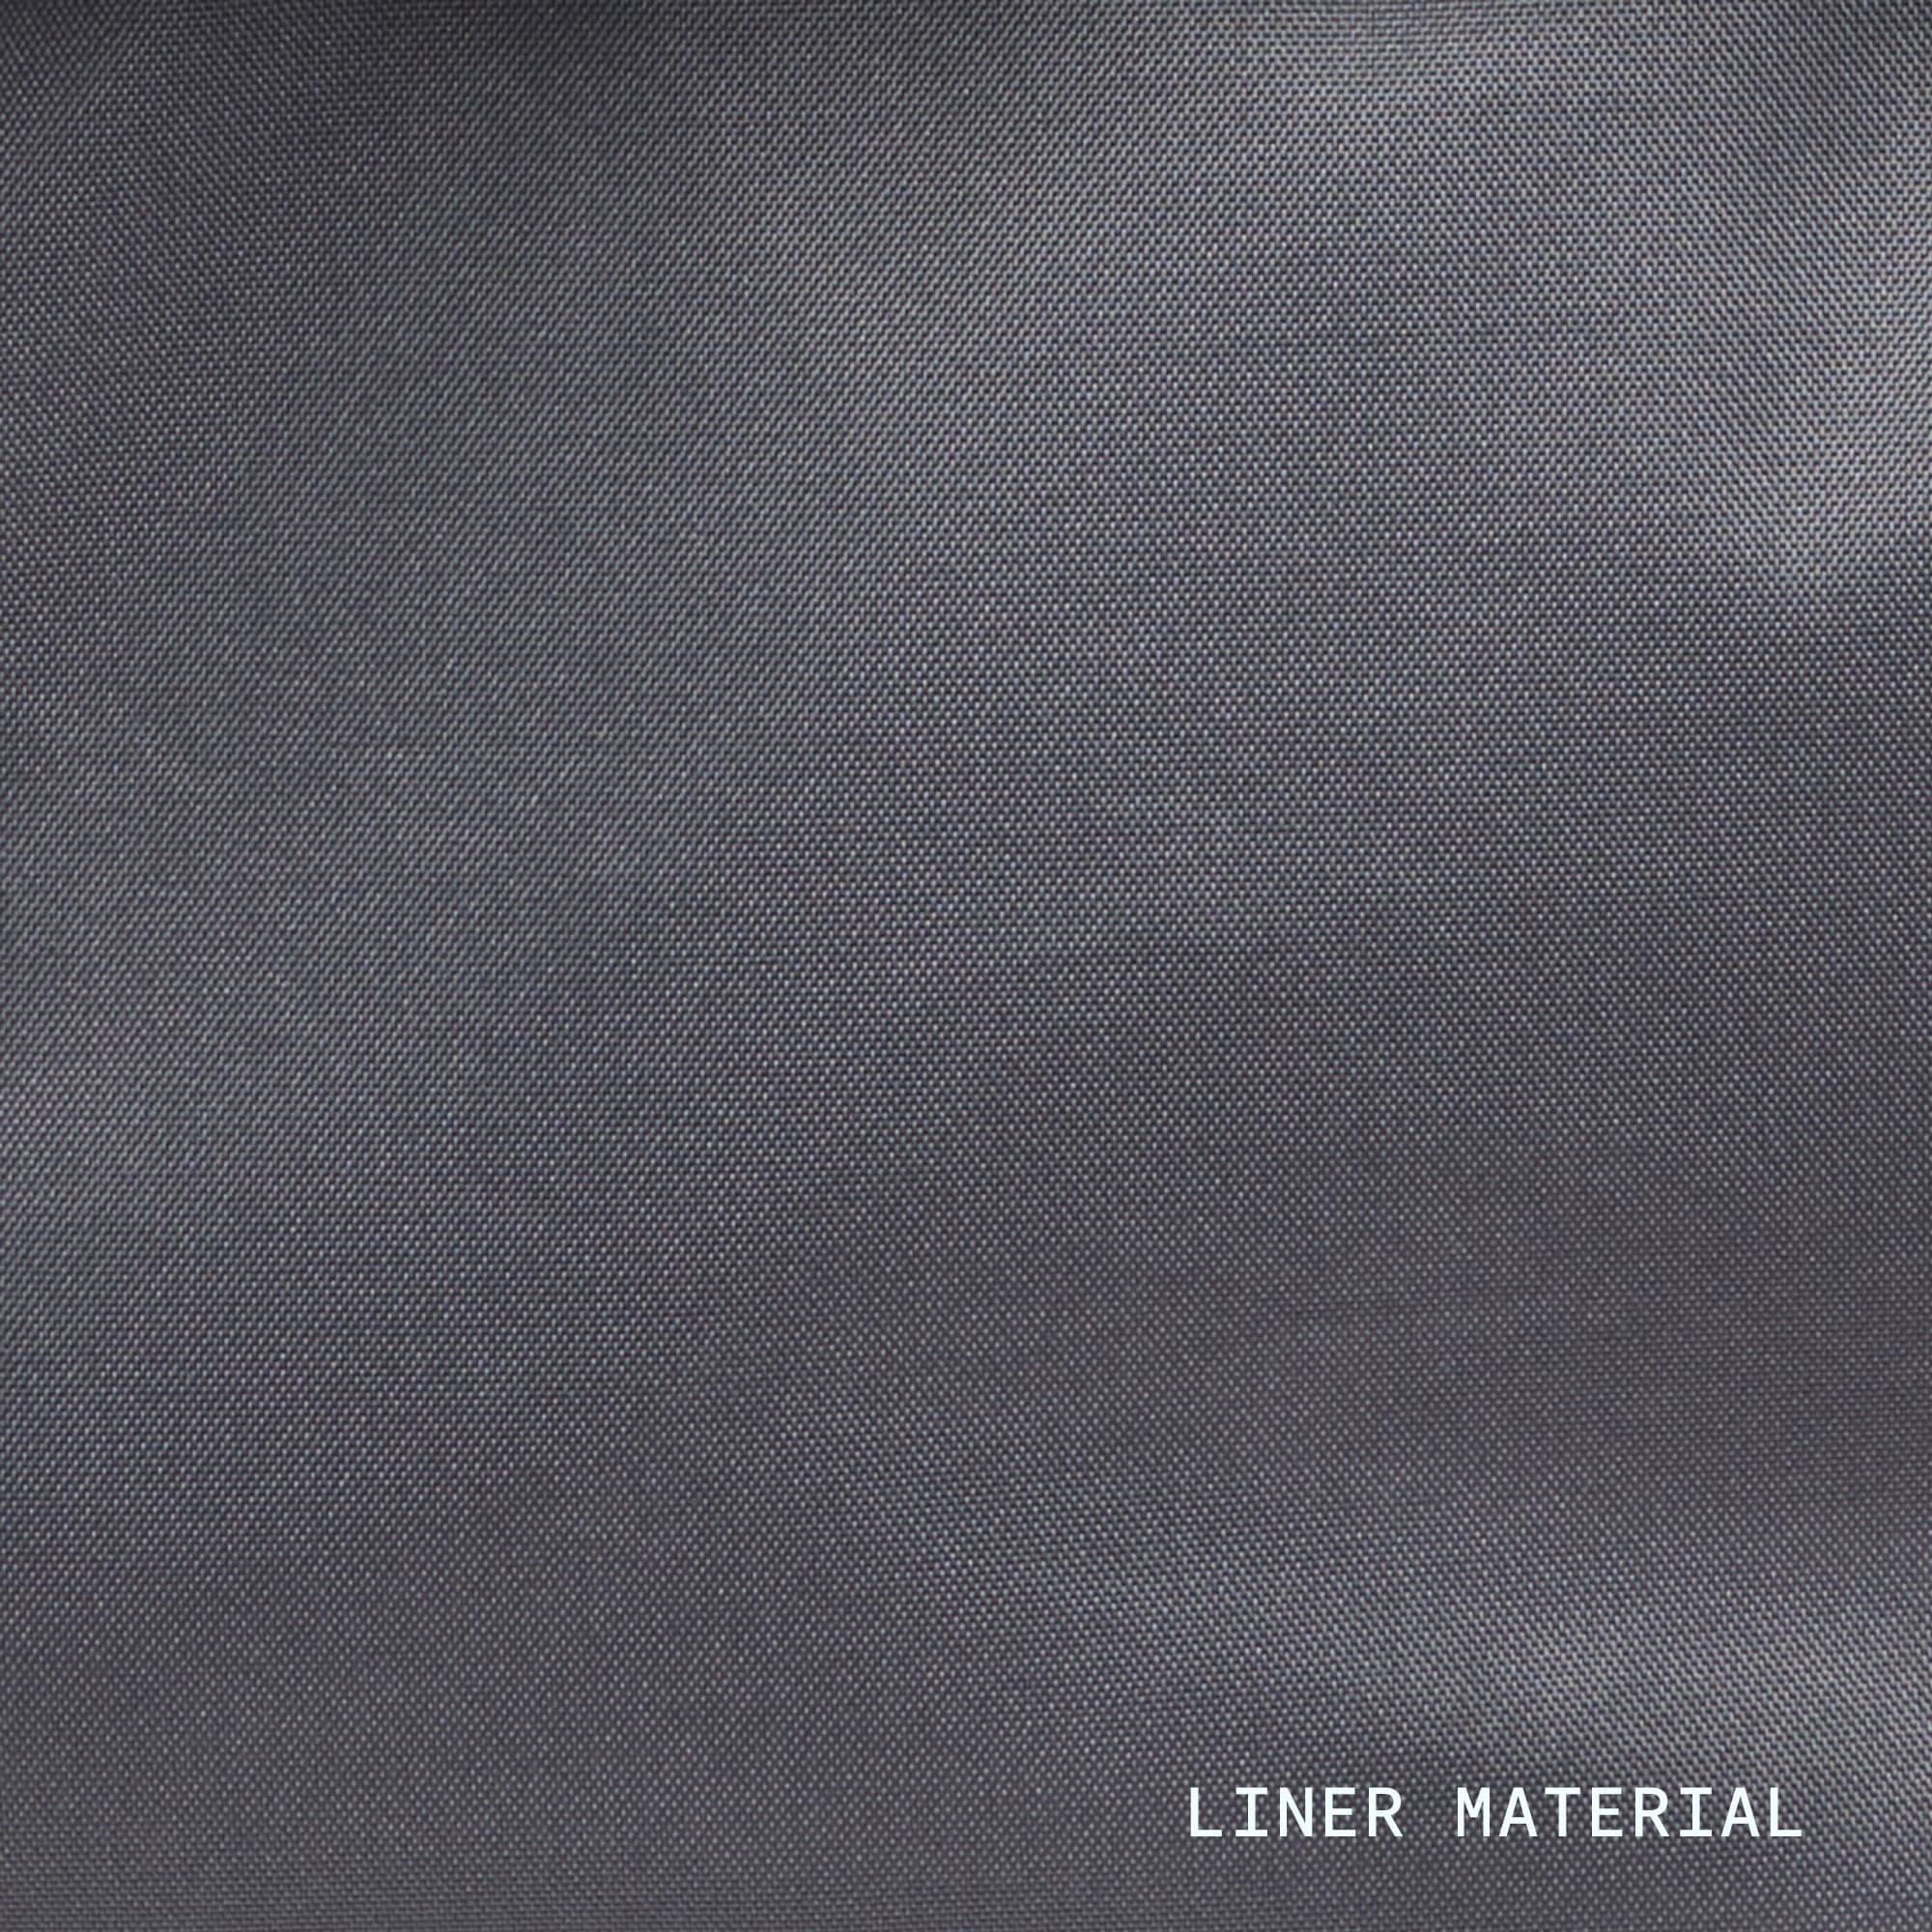 Logan pouch liner for the black color #color_black